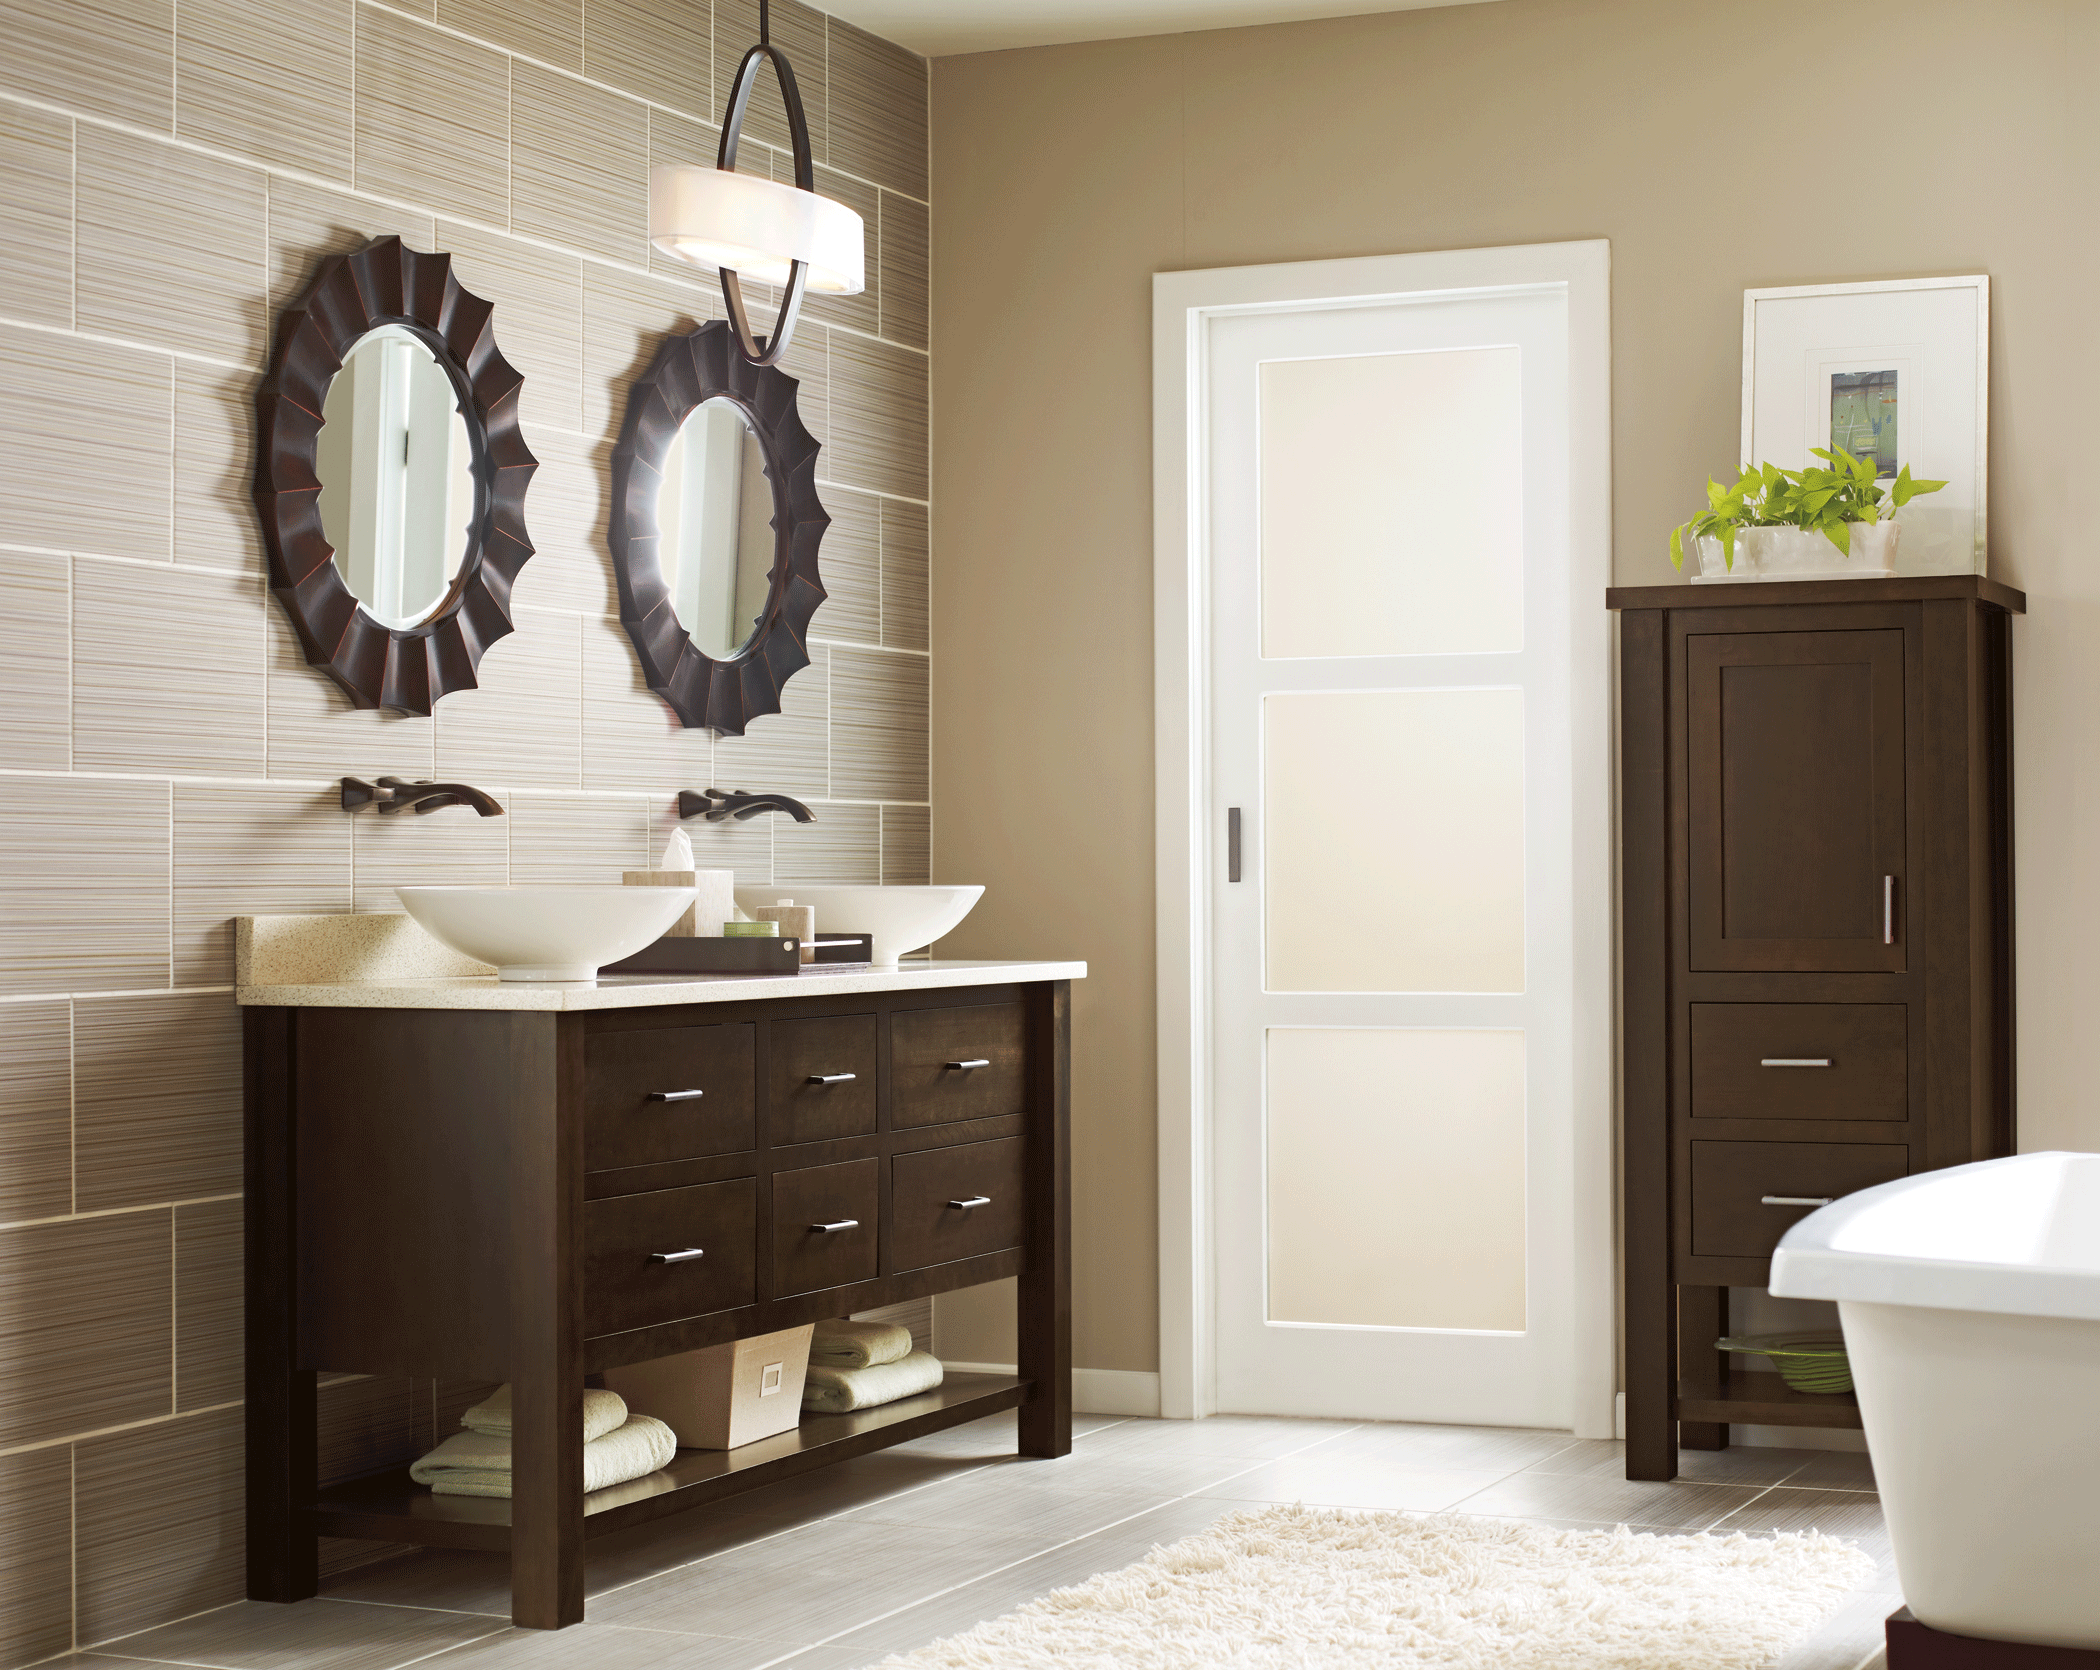 Great Bathroom Vanities Sensational Bathroom Vanities Columbus Ohio Home Ideas Image 5 from SQMIKNA